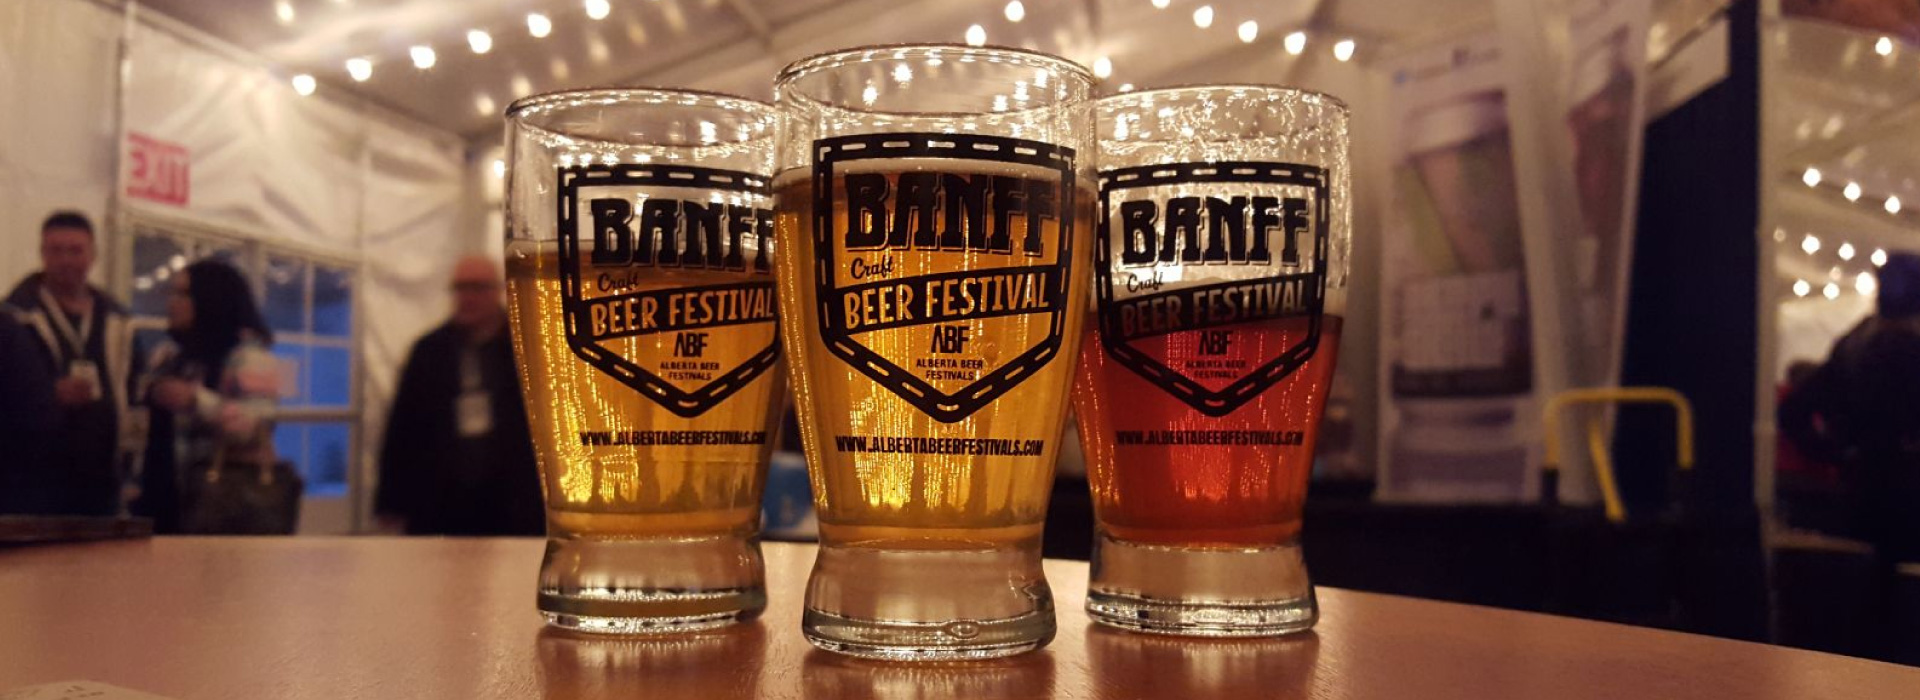 Banff Beer Festival Banff Lodging Company